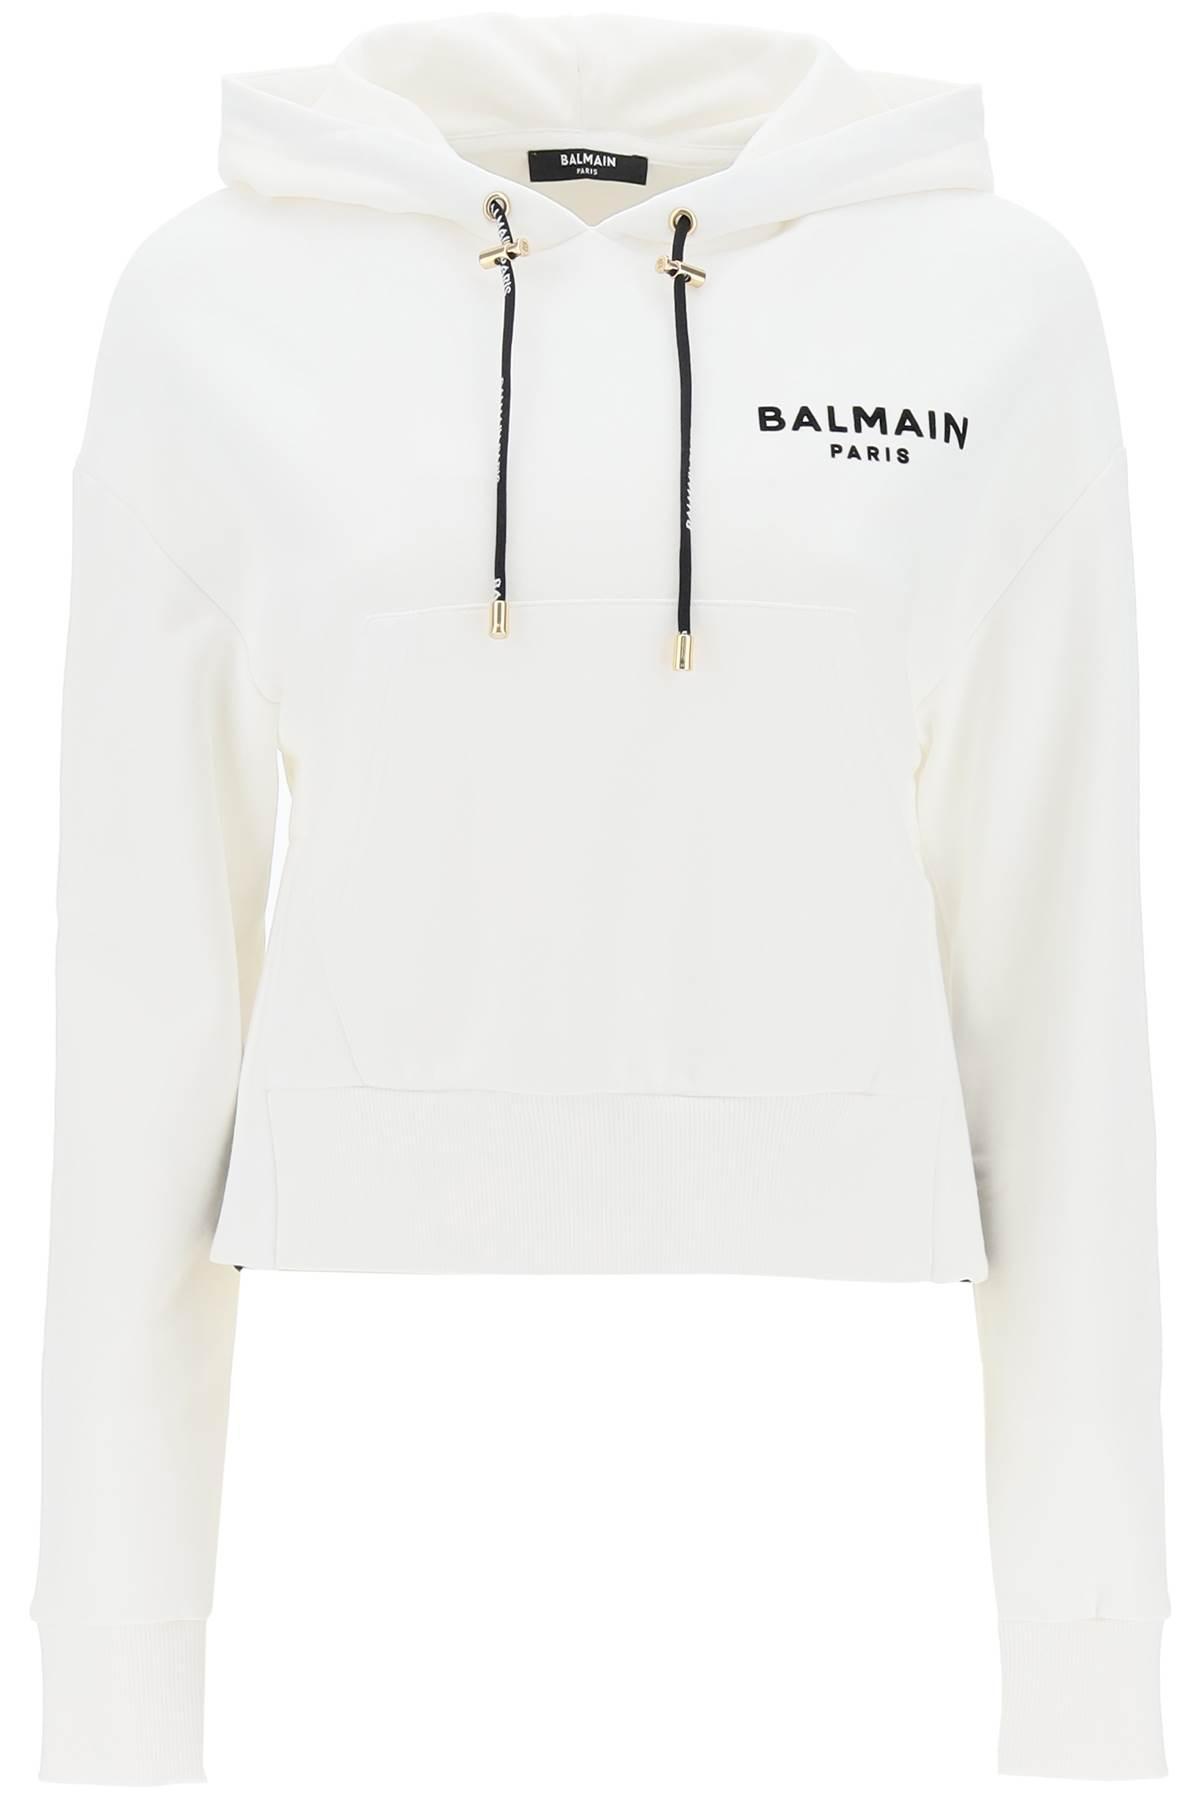 Ombord civile handle Balmain Cropped Sweatshirt With Flocked Logo Print in White | Lyst